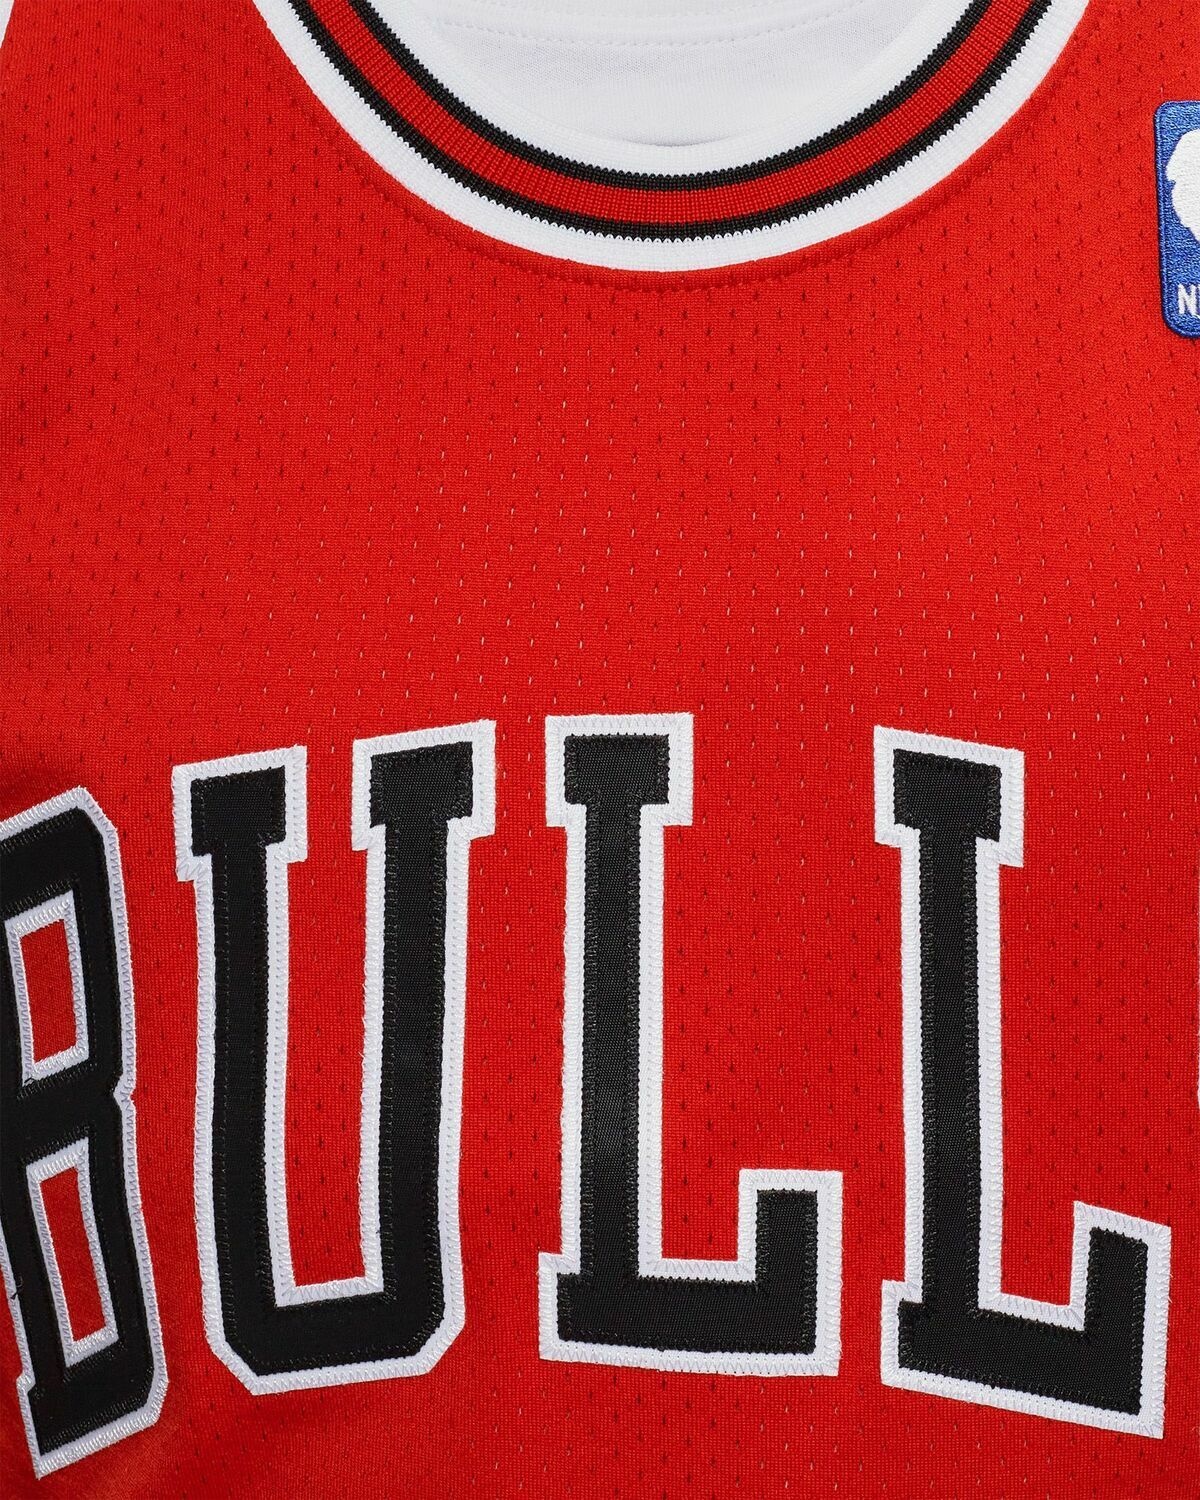 Mitchell & Ness Nba Authentic Jersey Chicago Bulls 1994 95 Michael Jordan #45 Red - Mens - Jerseys